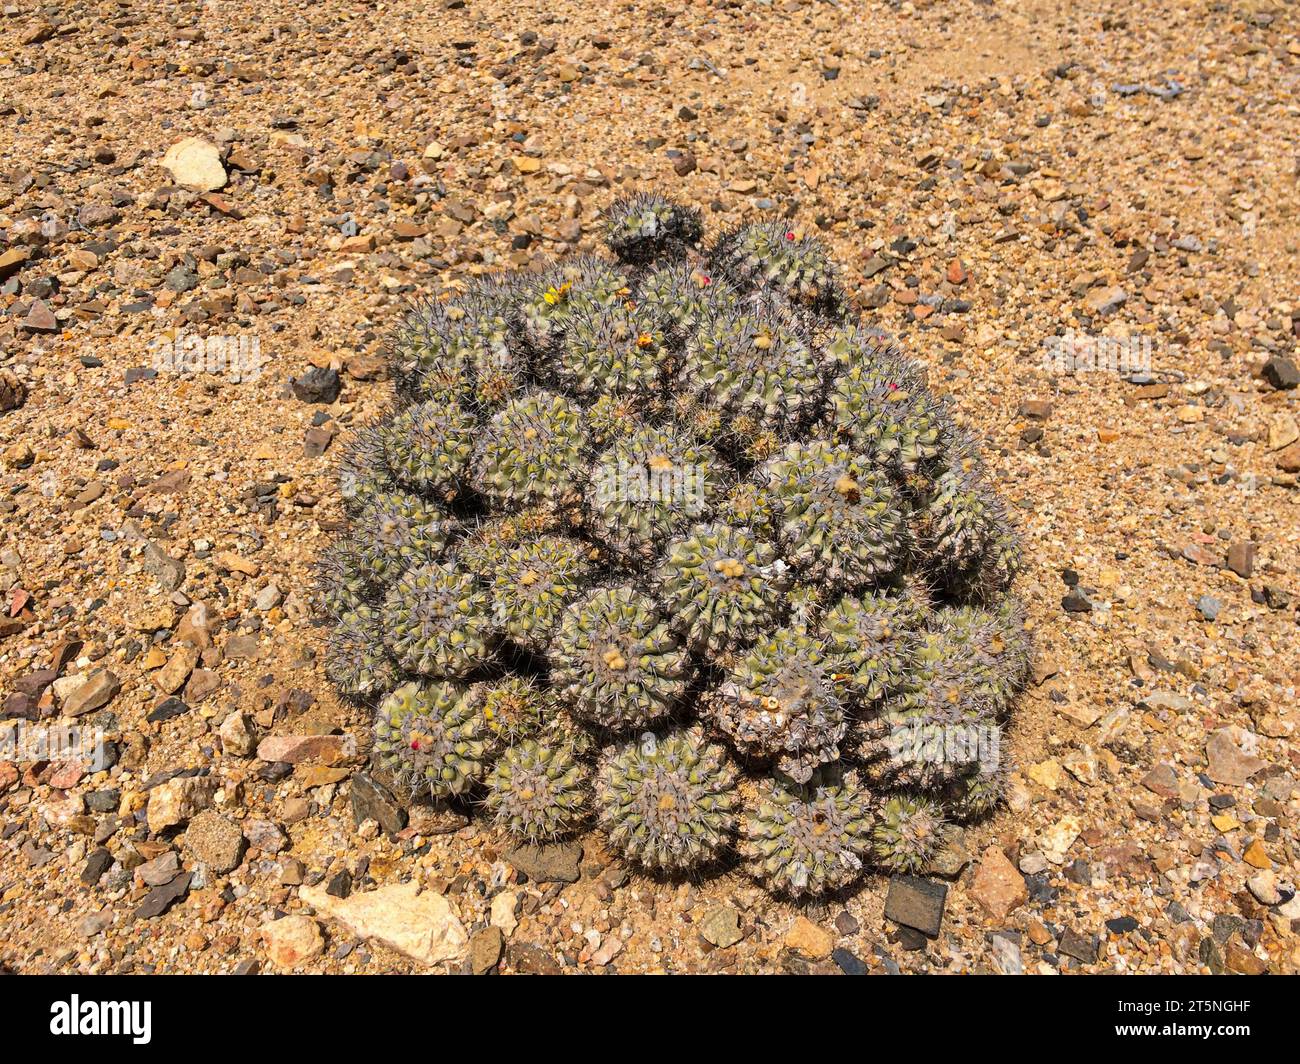 Copiapoa Cinerea cactus in its natural habitat near Antofagasta, Chile. Bright sunlight and dry soil. Globular cactus, with many stems. Stock Photo